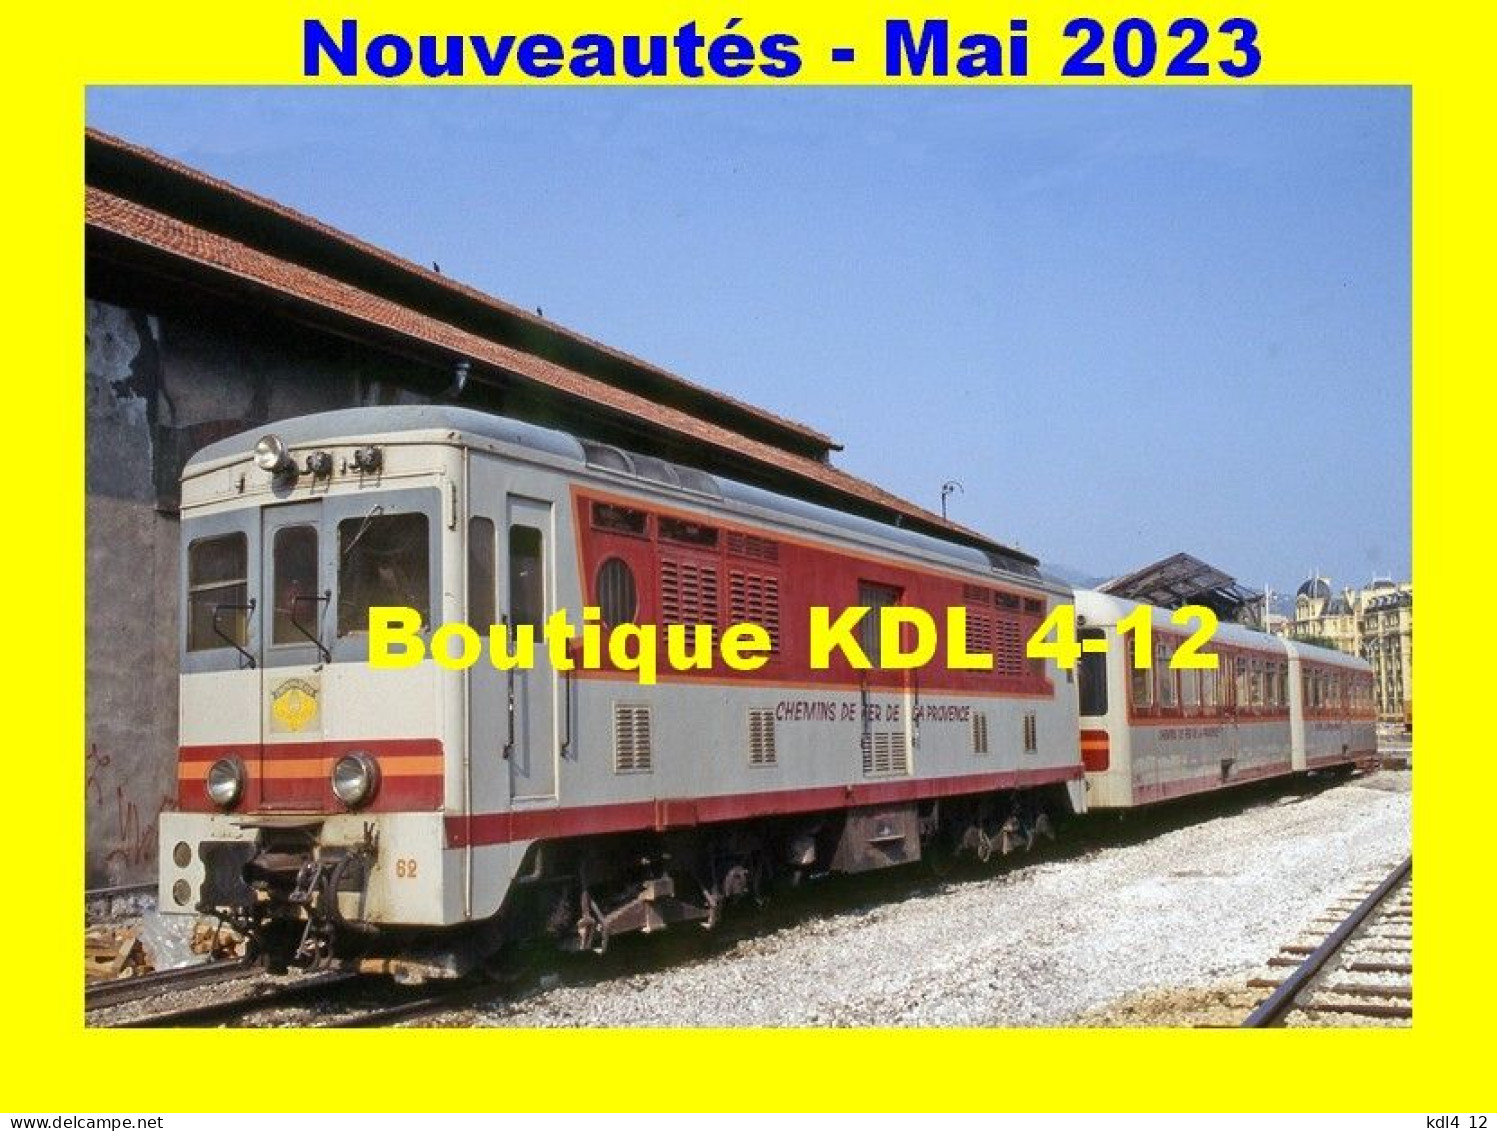 AL 879 - Train, Loco Brissonneau Et Lotz N° 62 - NICE - Alpes Maritimes - CP - Transport (rail) - Station